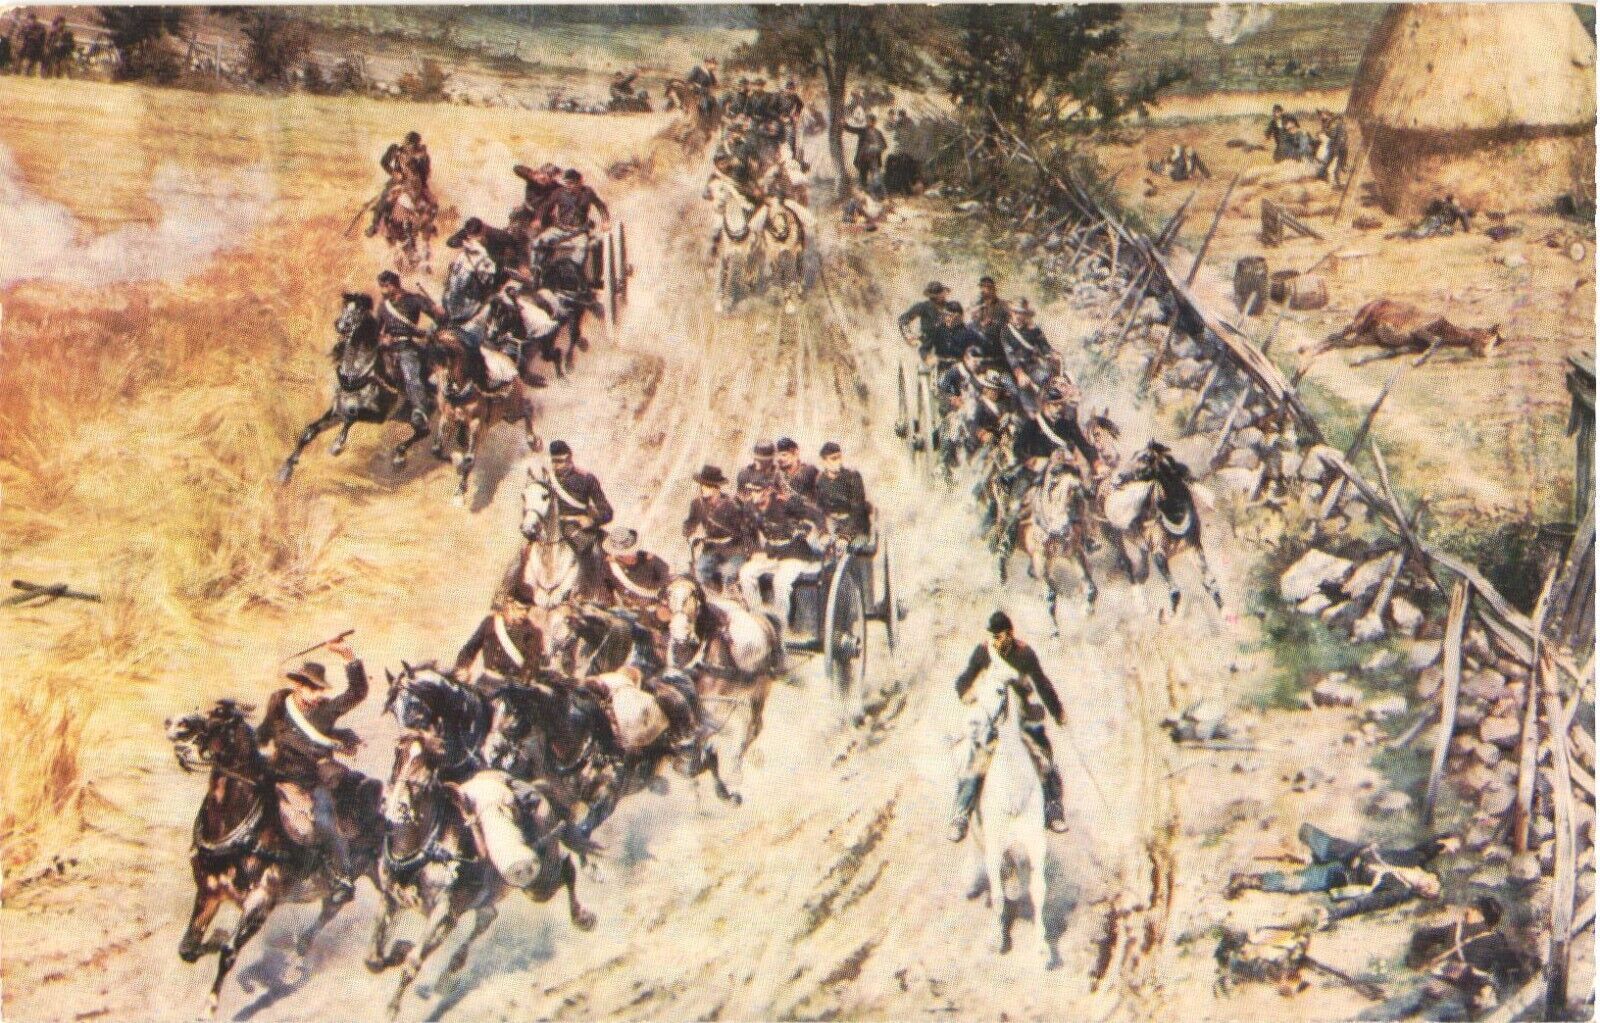 The Battle of Gettysburg Painting At Cyclorama, Gettysburg Pennsylvania Postcard